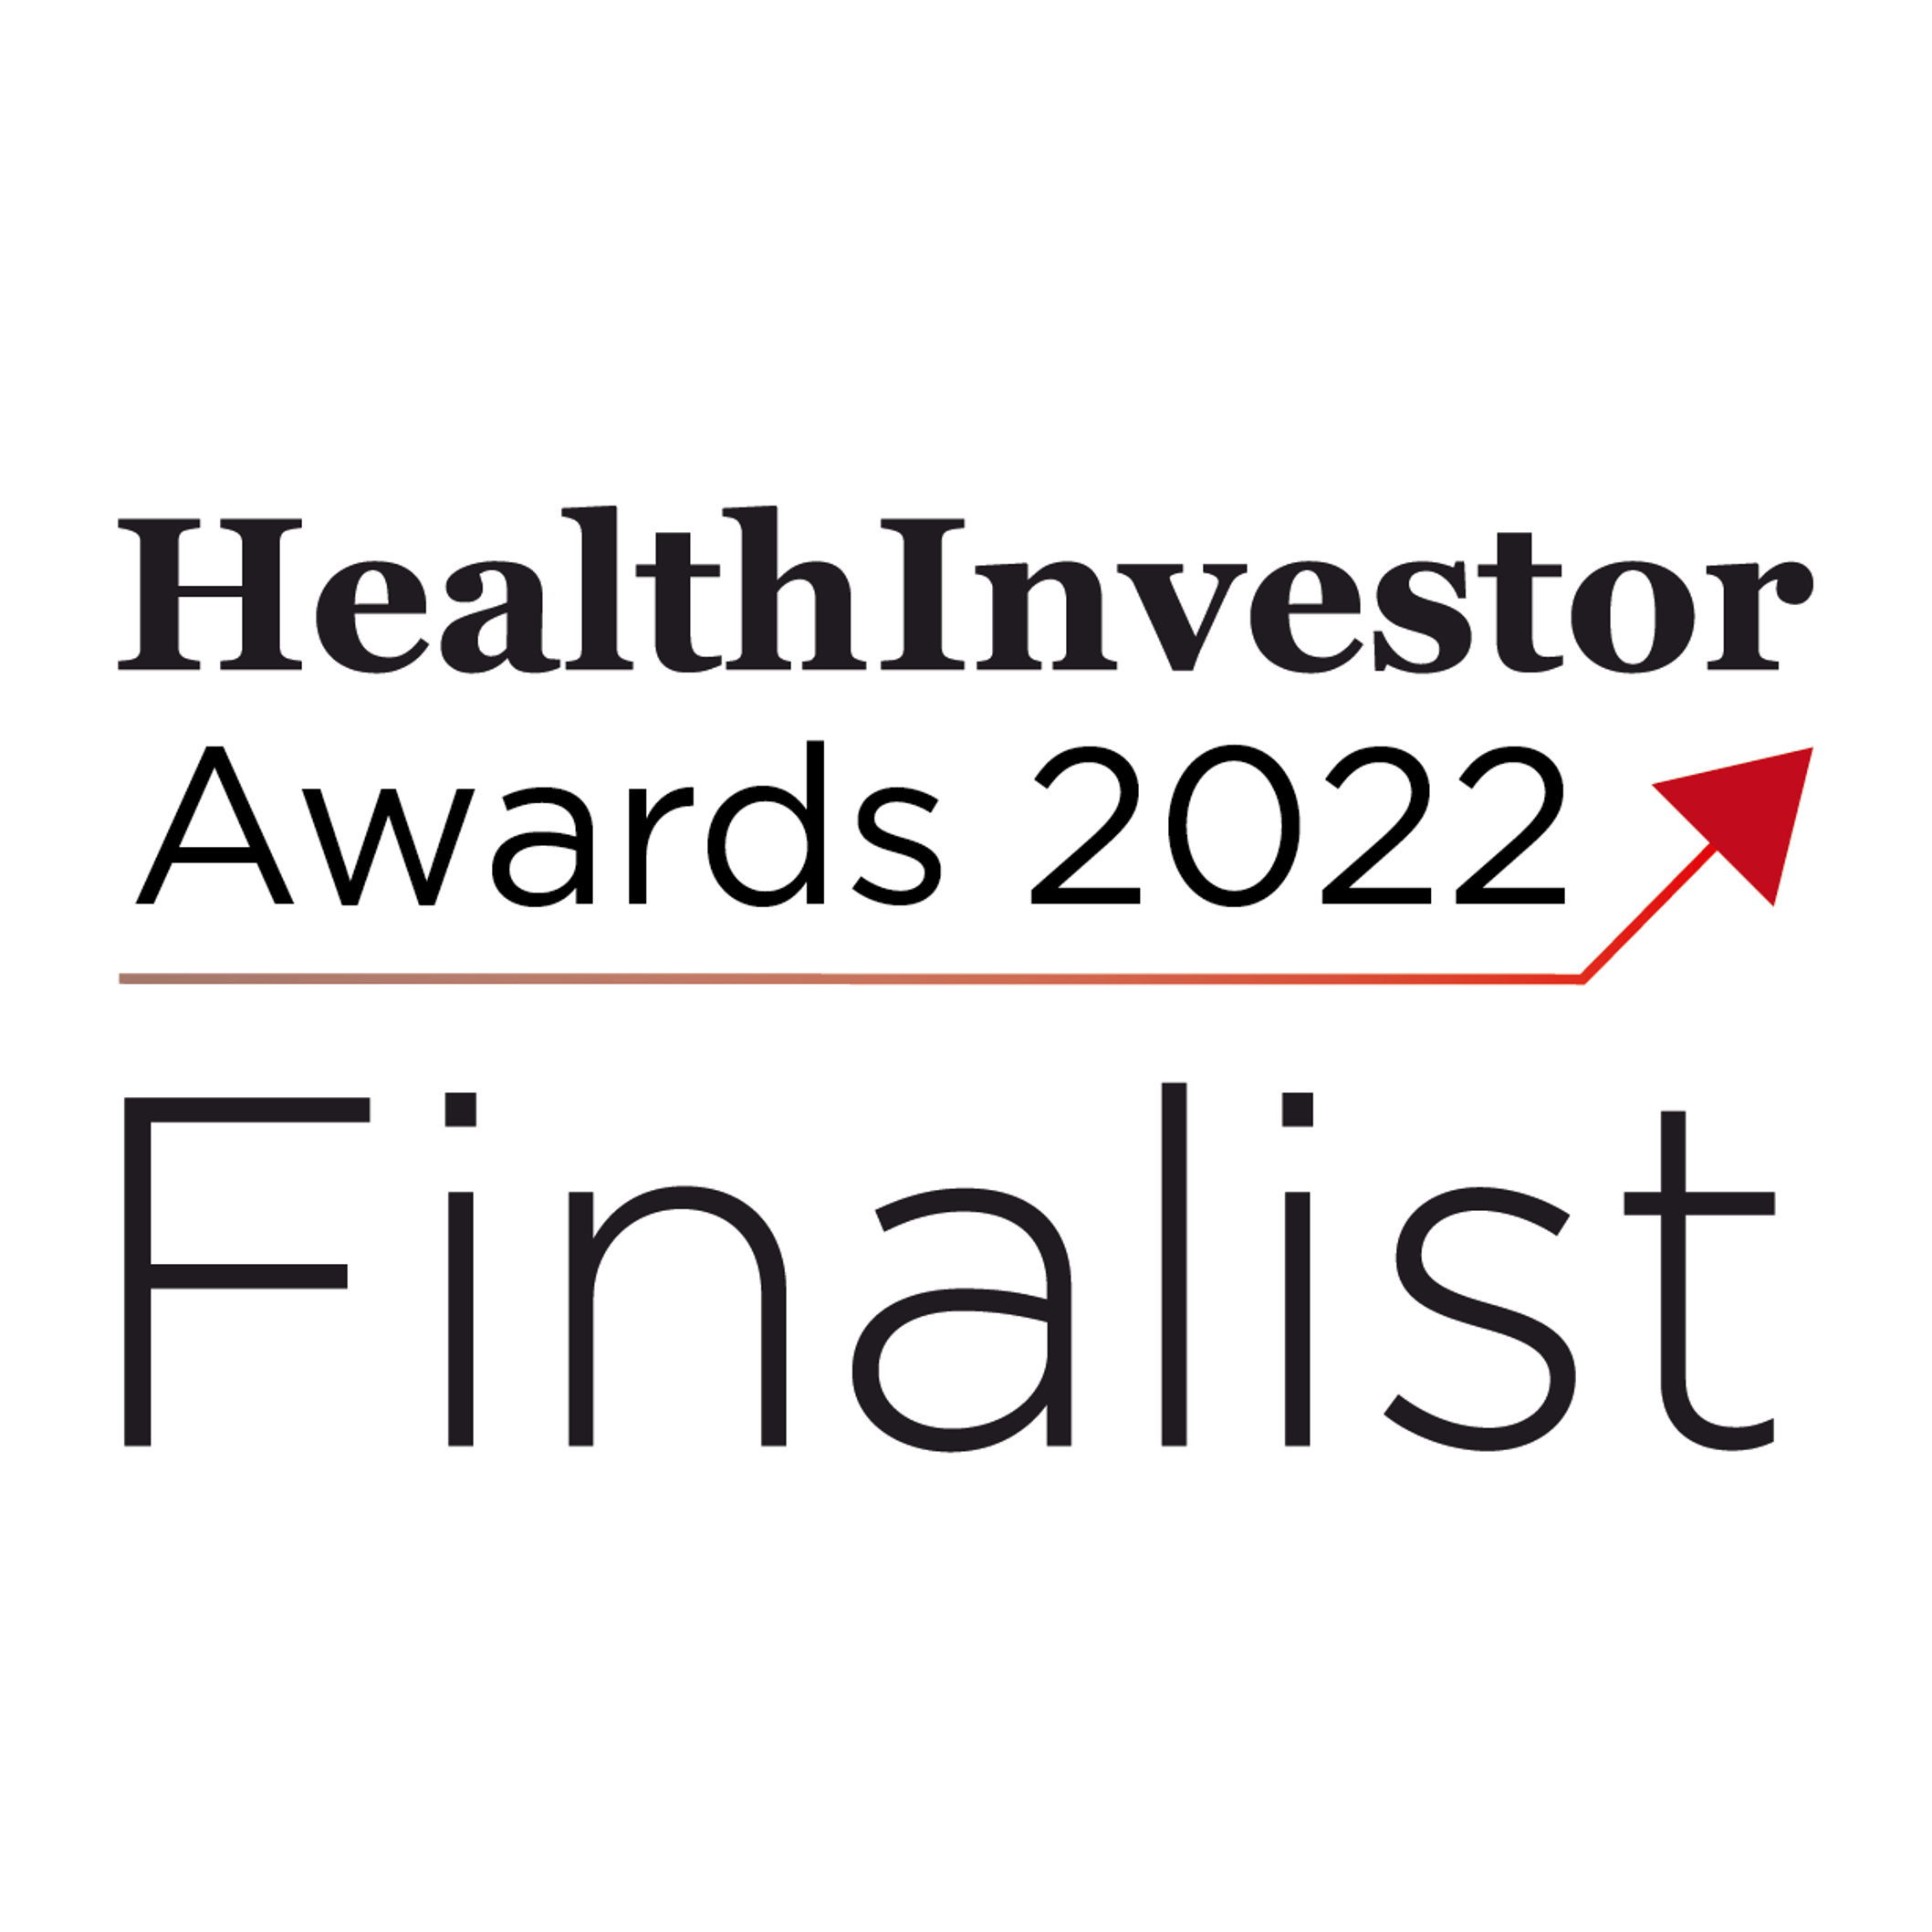 Health Investor Awards 2022 Logo Image.png